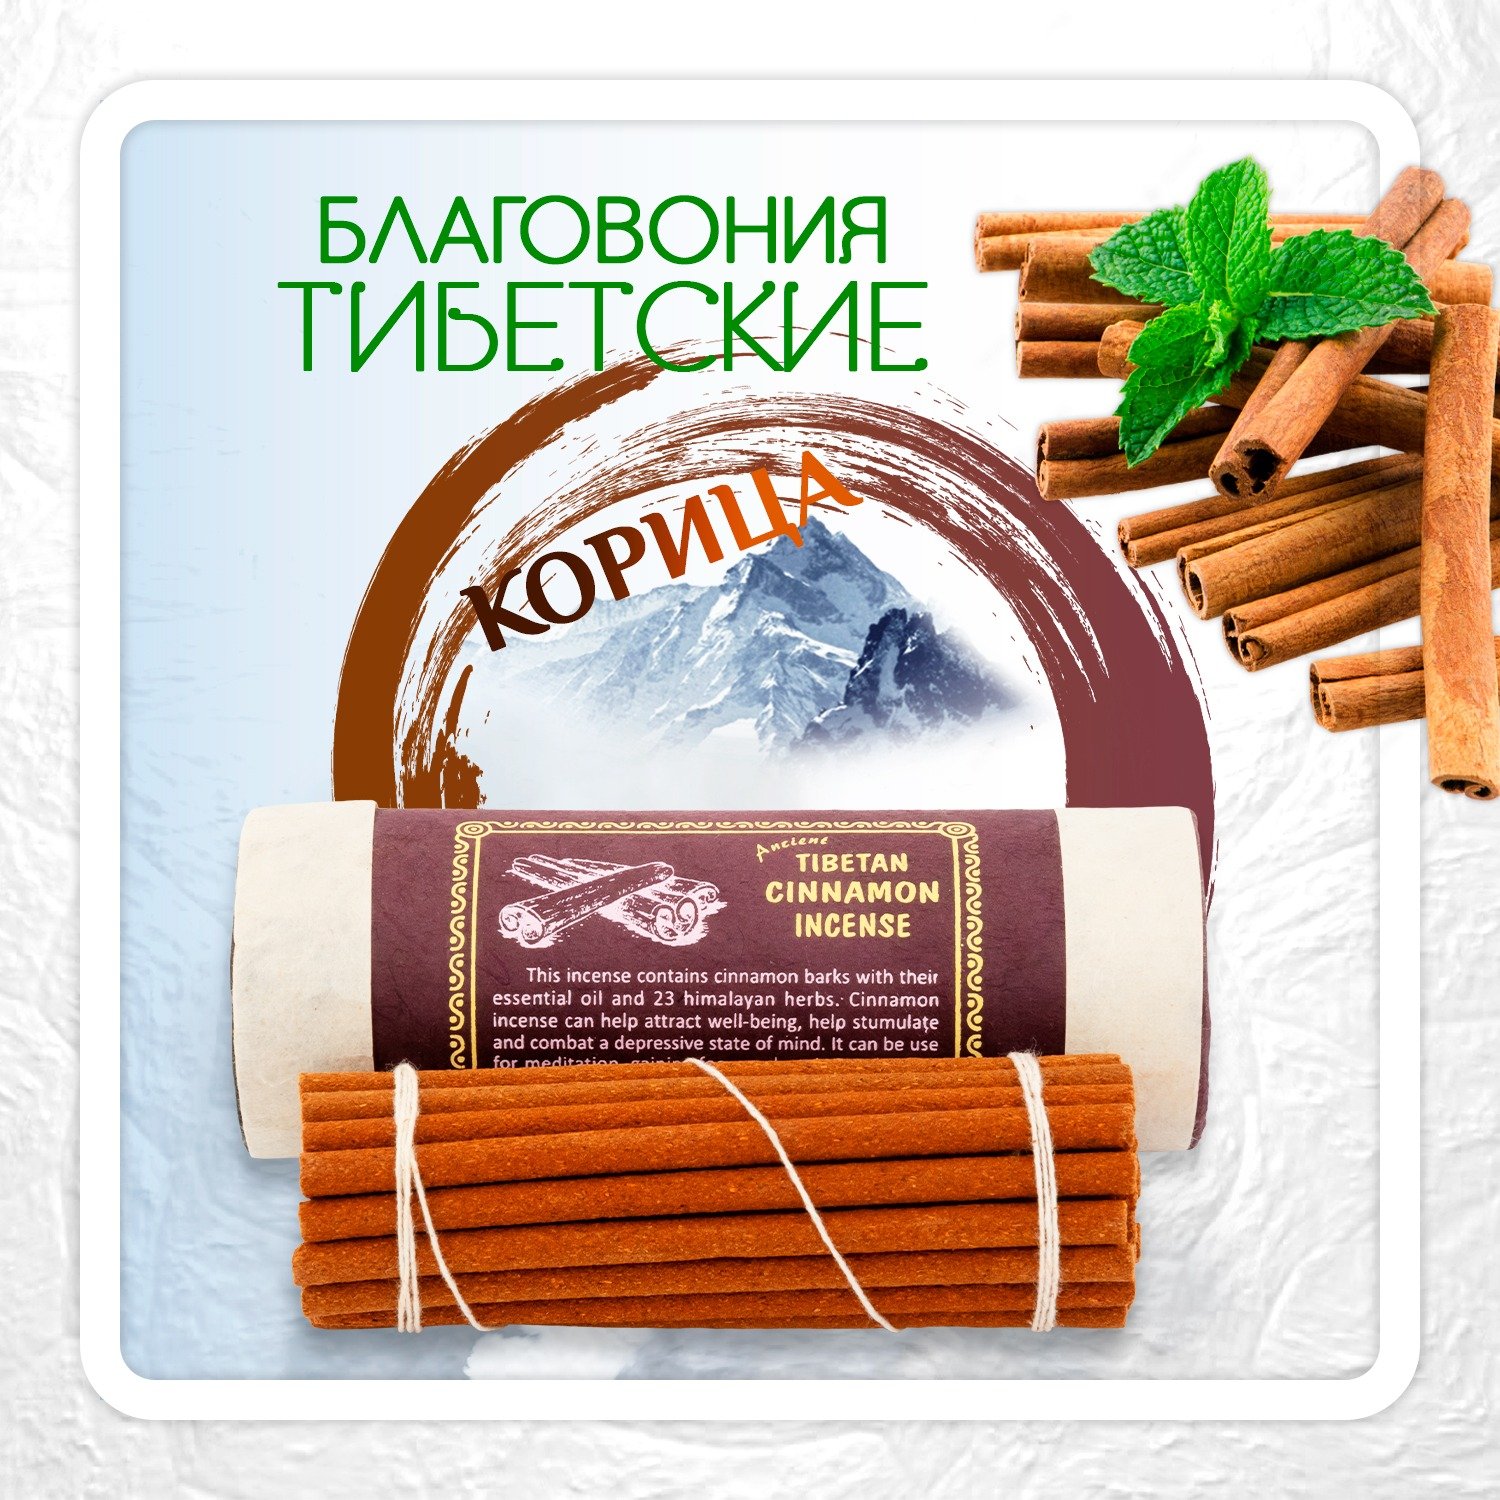 Благовоние Tibetan Cinnamon Incence / корица, 30 палочек по 10,5 см. 